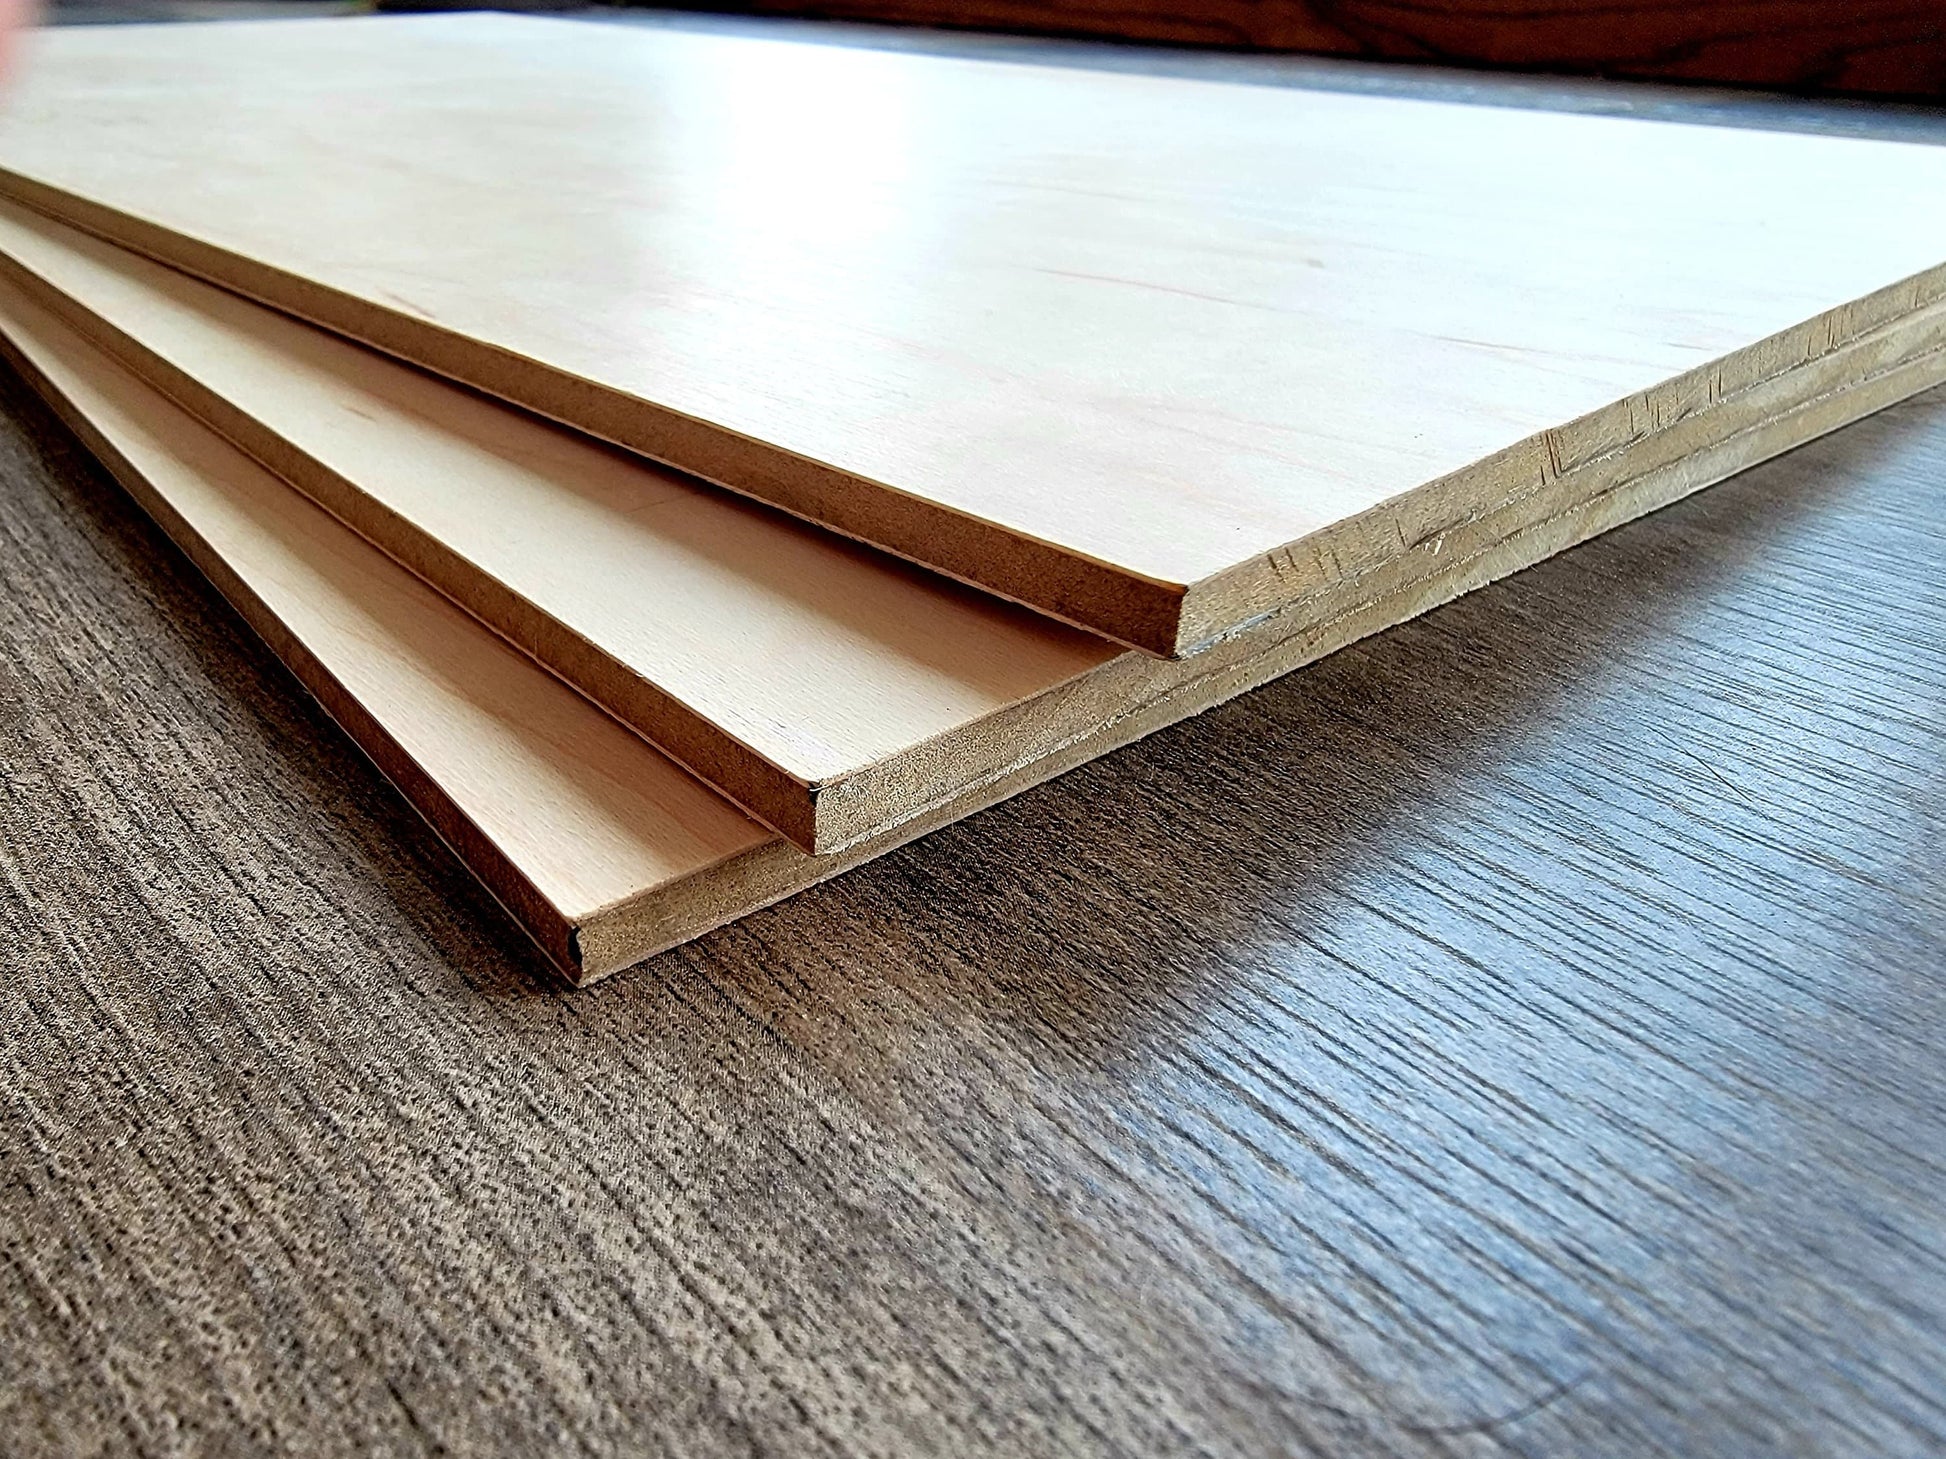  Ebony Wood Veneer MDF Board, 1/8 Wood Veneer Sheet Ebony  Veneer Unfinished Wood Sheet For Laser Cutting, 12 X 12 Thin Wood For  Crafts, 10Pack